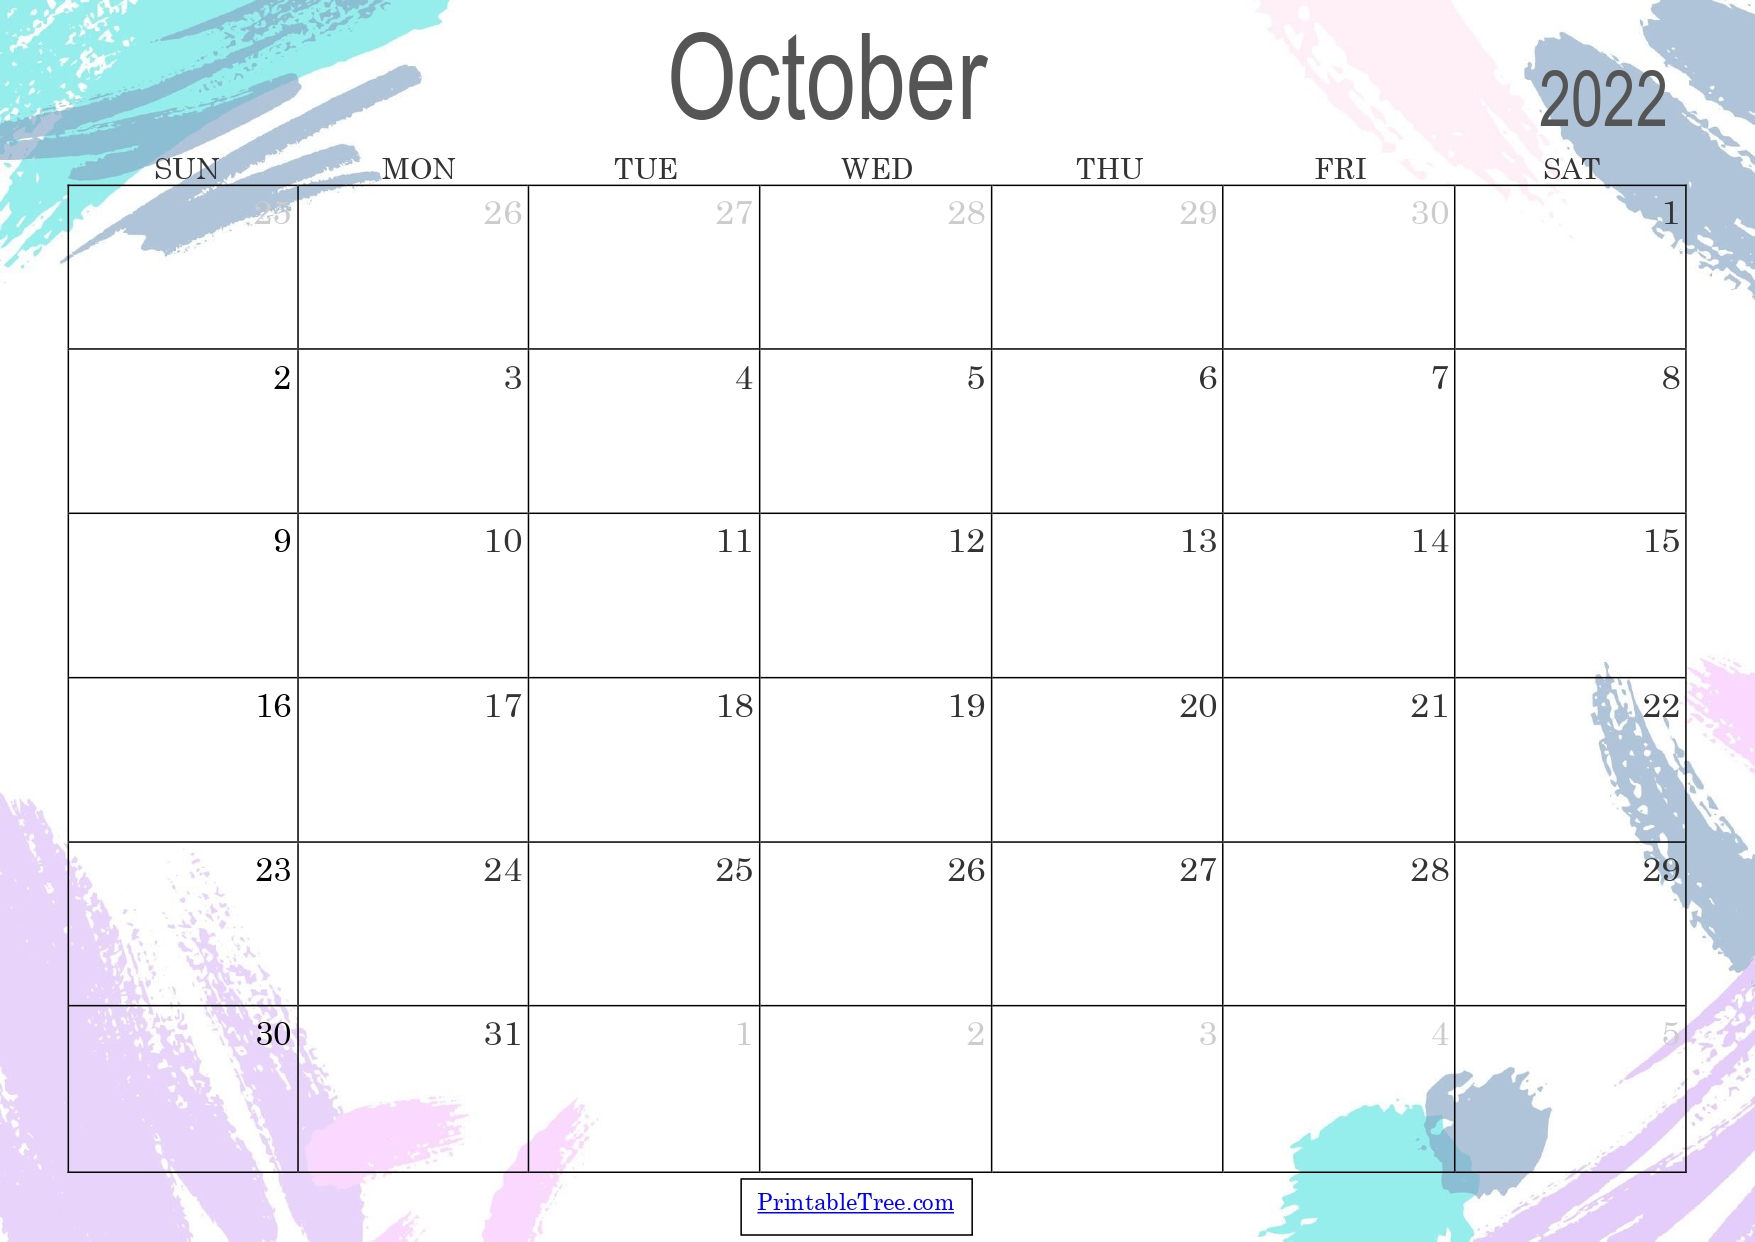 October 2022 Calendar Printable Free October 2022 Calendar Printable Pdf Free Templates With Holidays